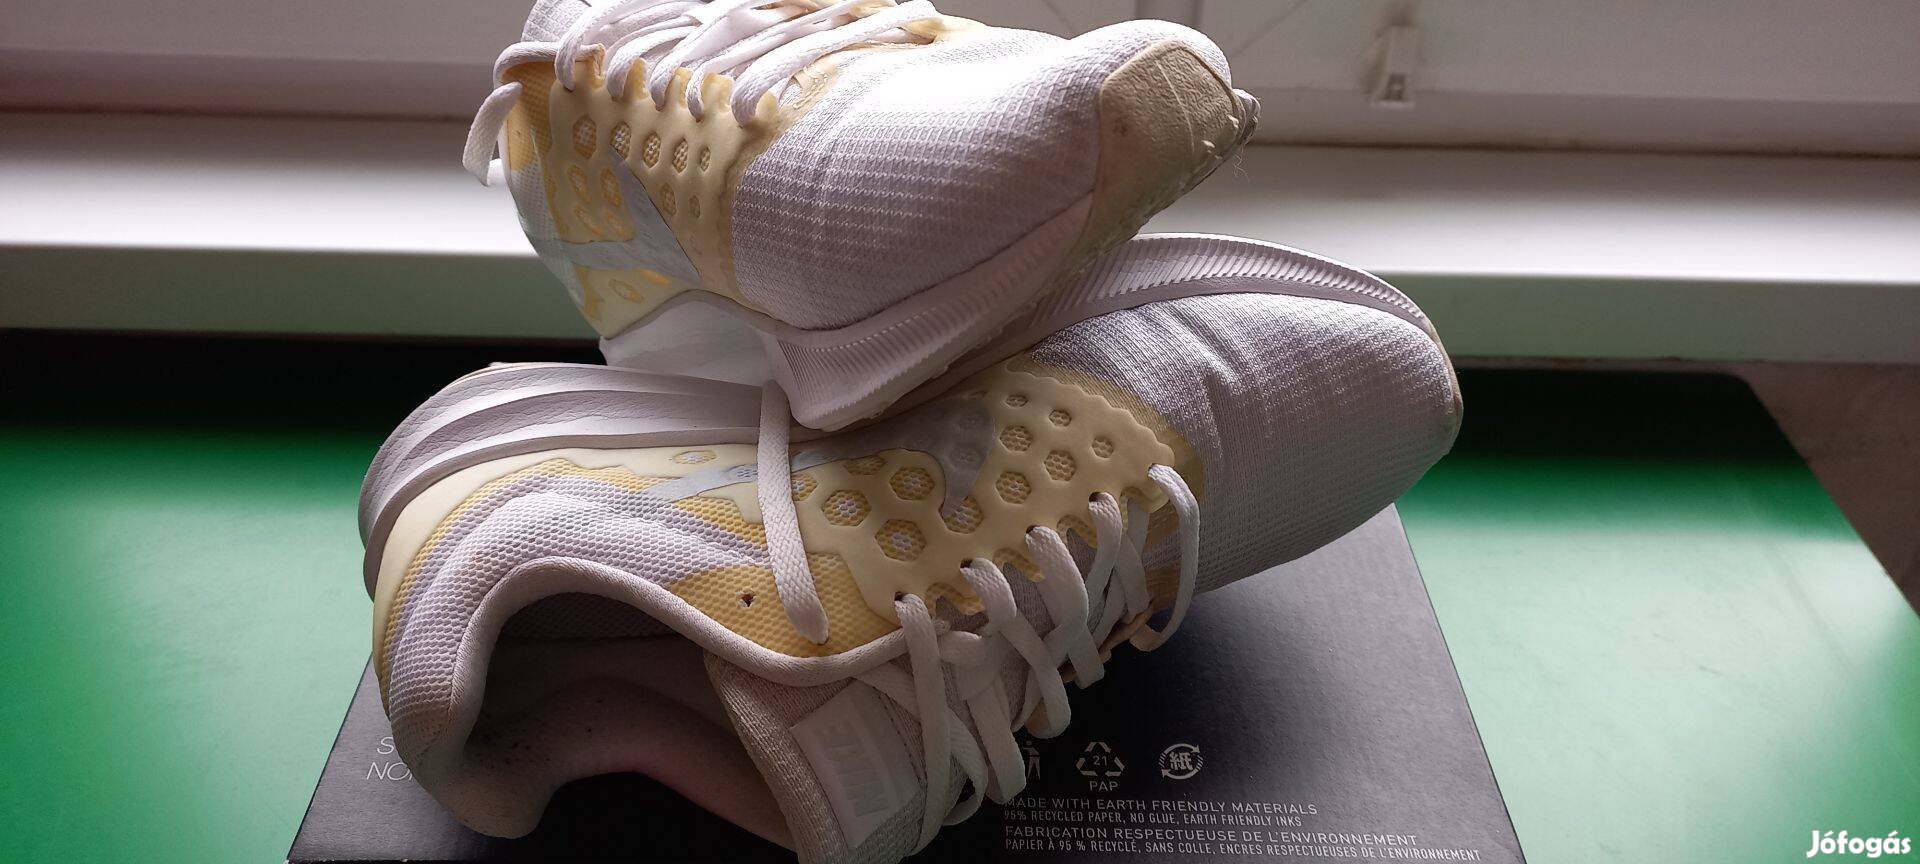 Nike cipő downshifter 7 fehér futócipő